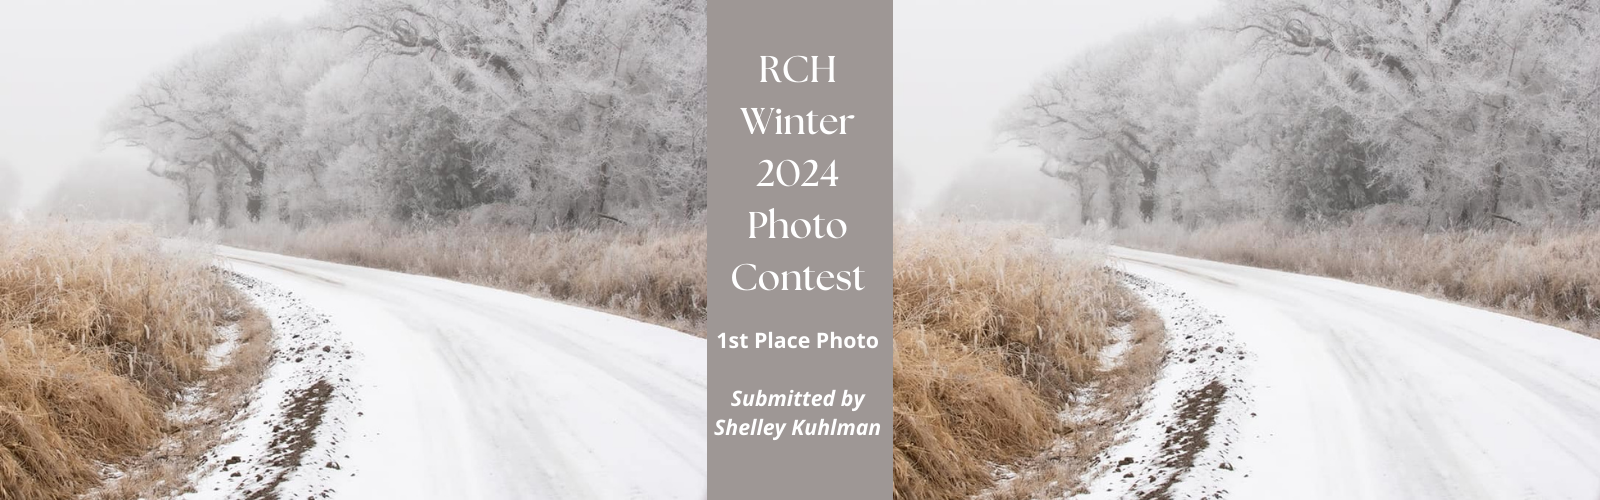 2024 winter photo contest - 1st place